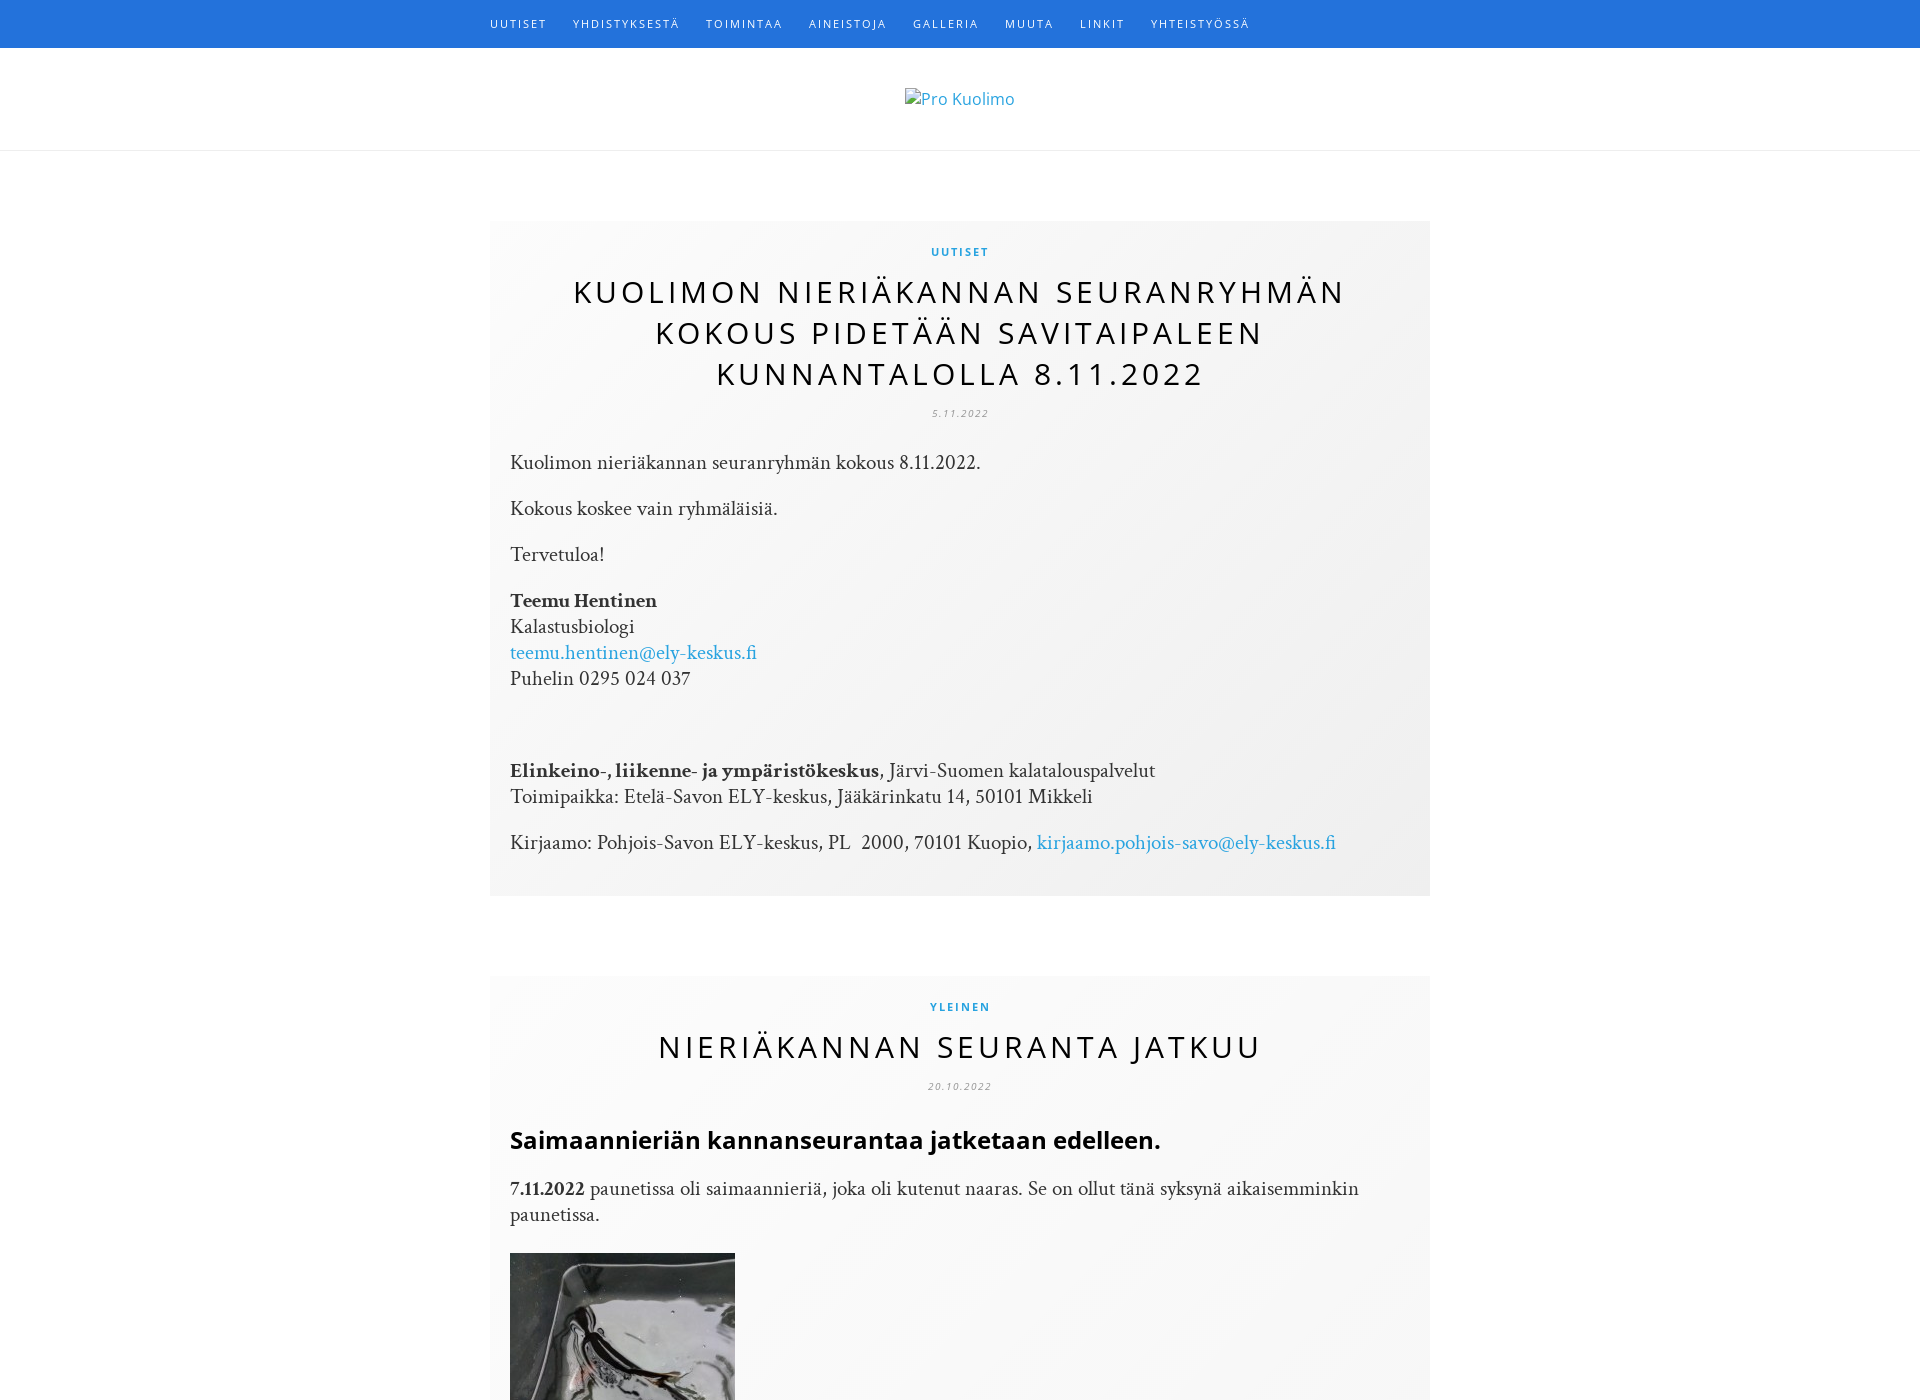 Screenshot for prokuolimo.fi